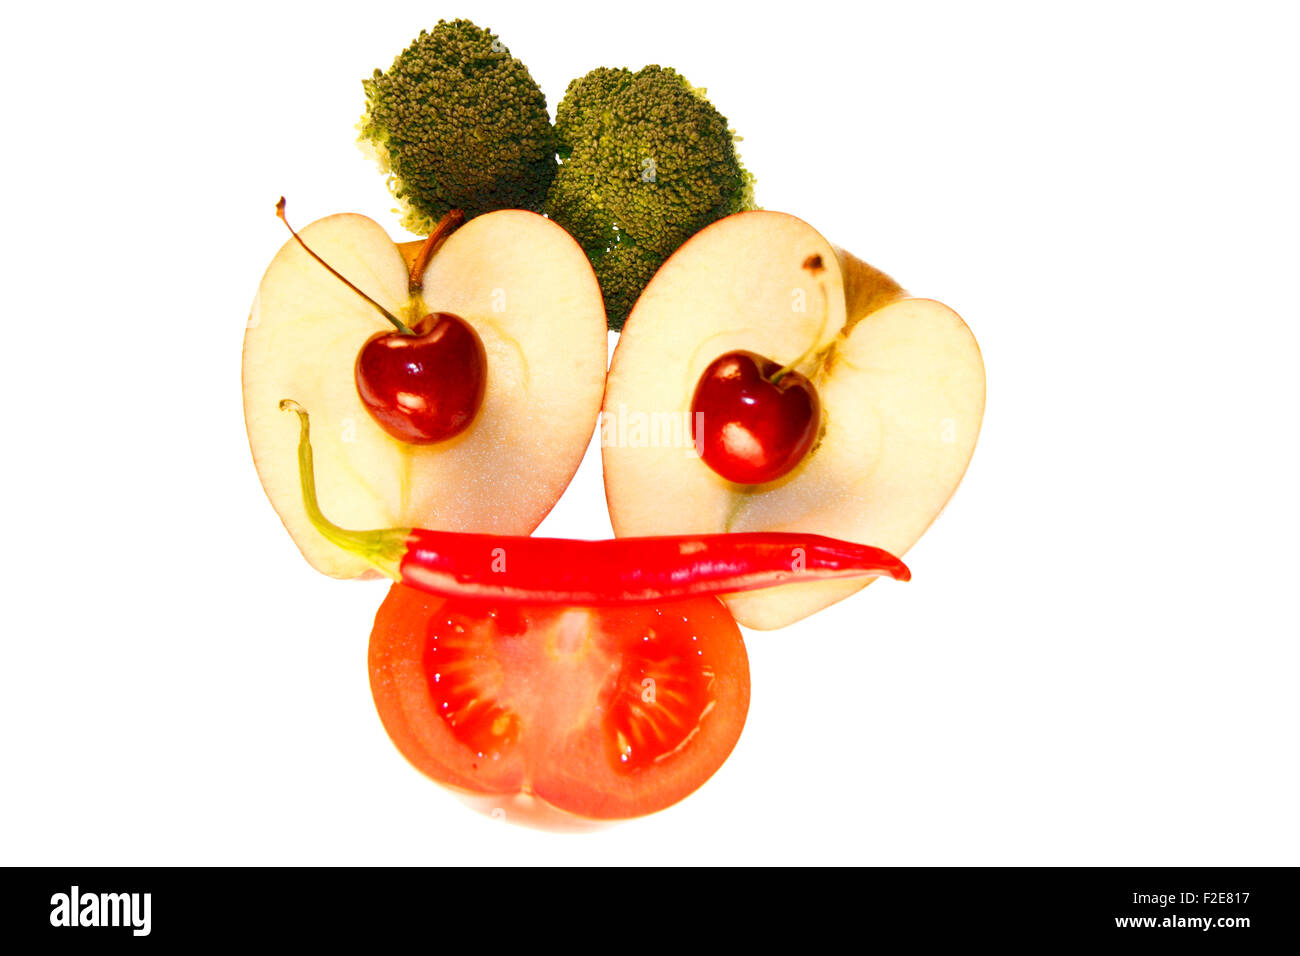 Gesicht/ face: Brokkoli, Kirschen, Apfel, Tomate, Chilly - Symbolbild Nahrungsmittel . Stock Photo